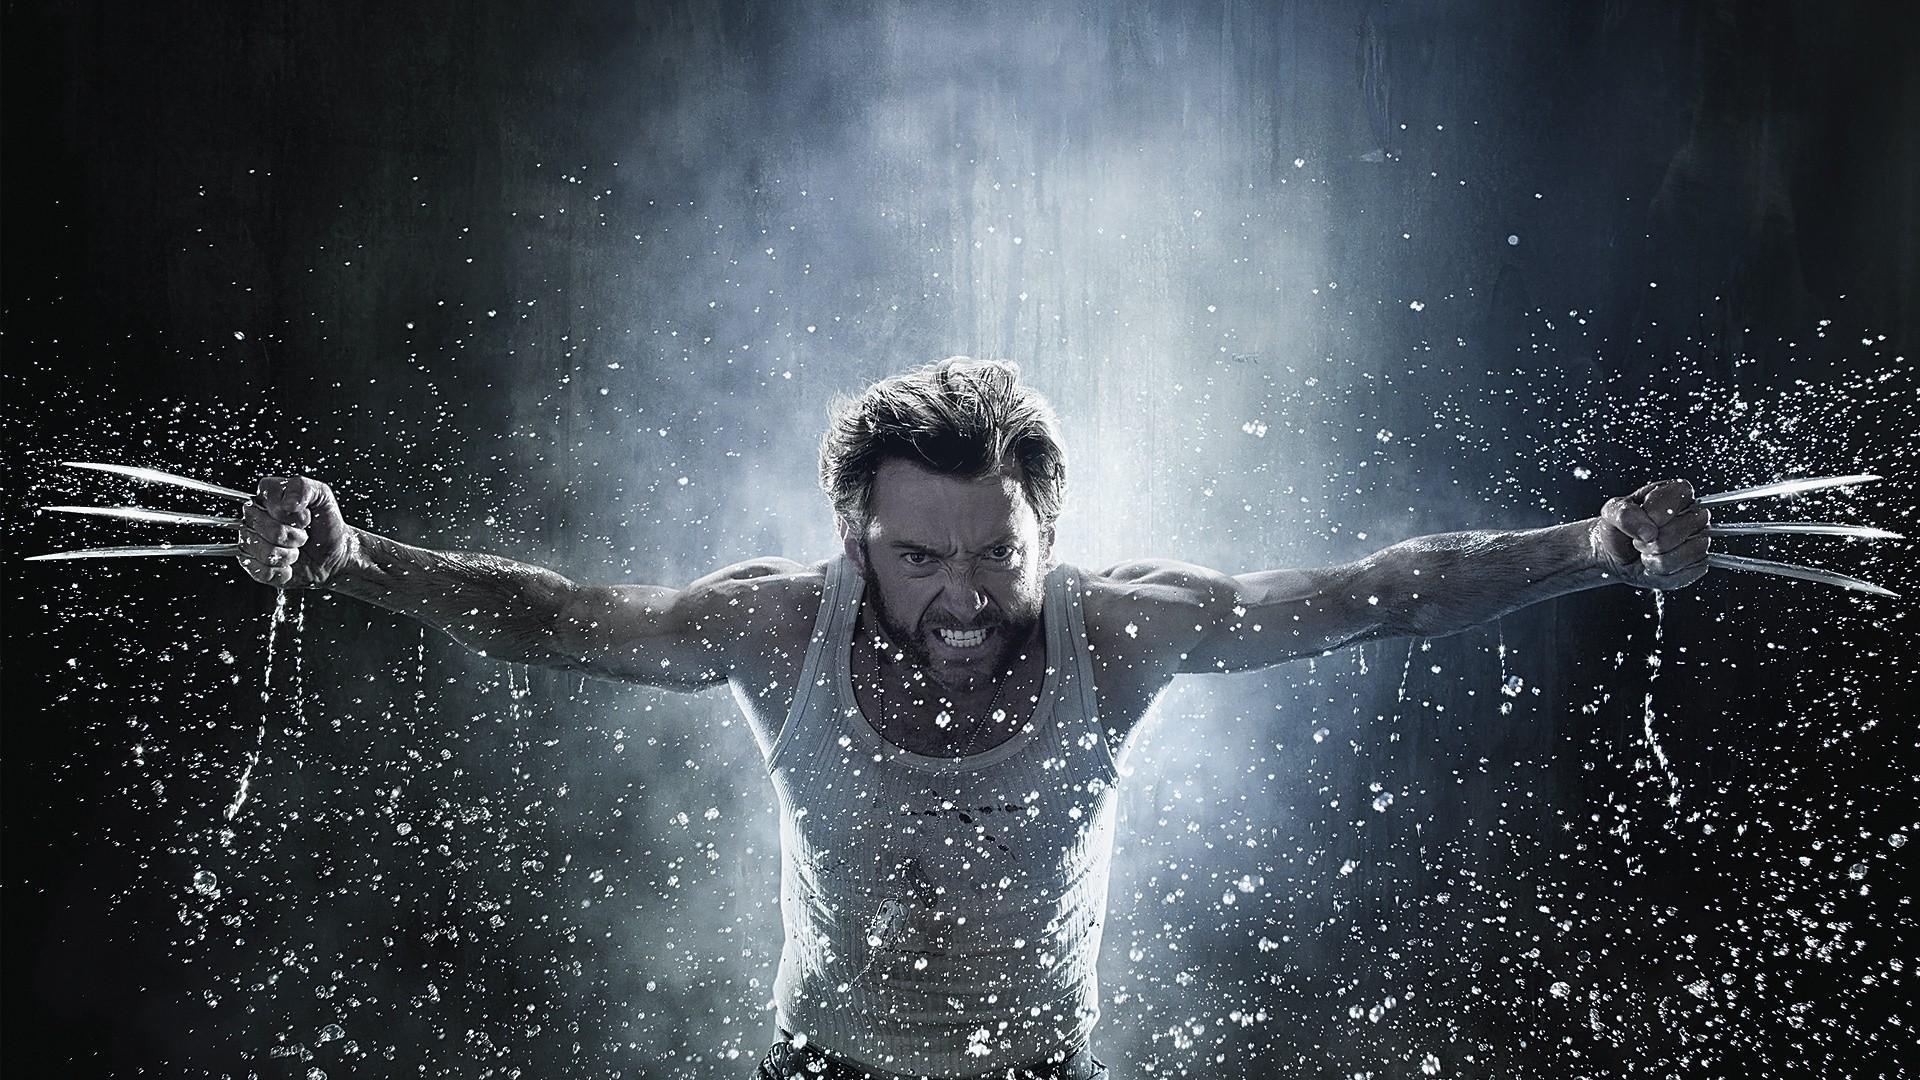 Hugh Jackman as Wolverine, Full HD wallpapers, Superhero action, Iconic character, 1920x1080 Full HD Desktop